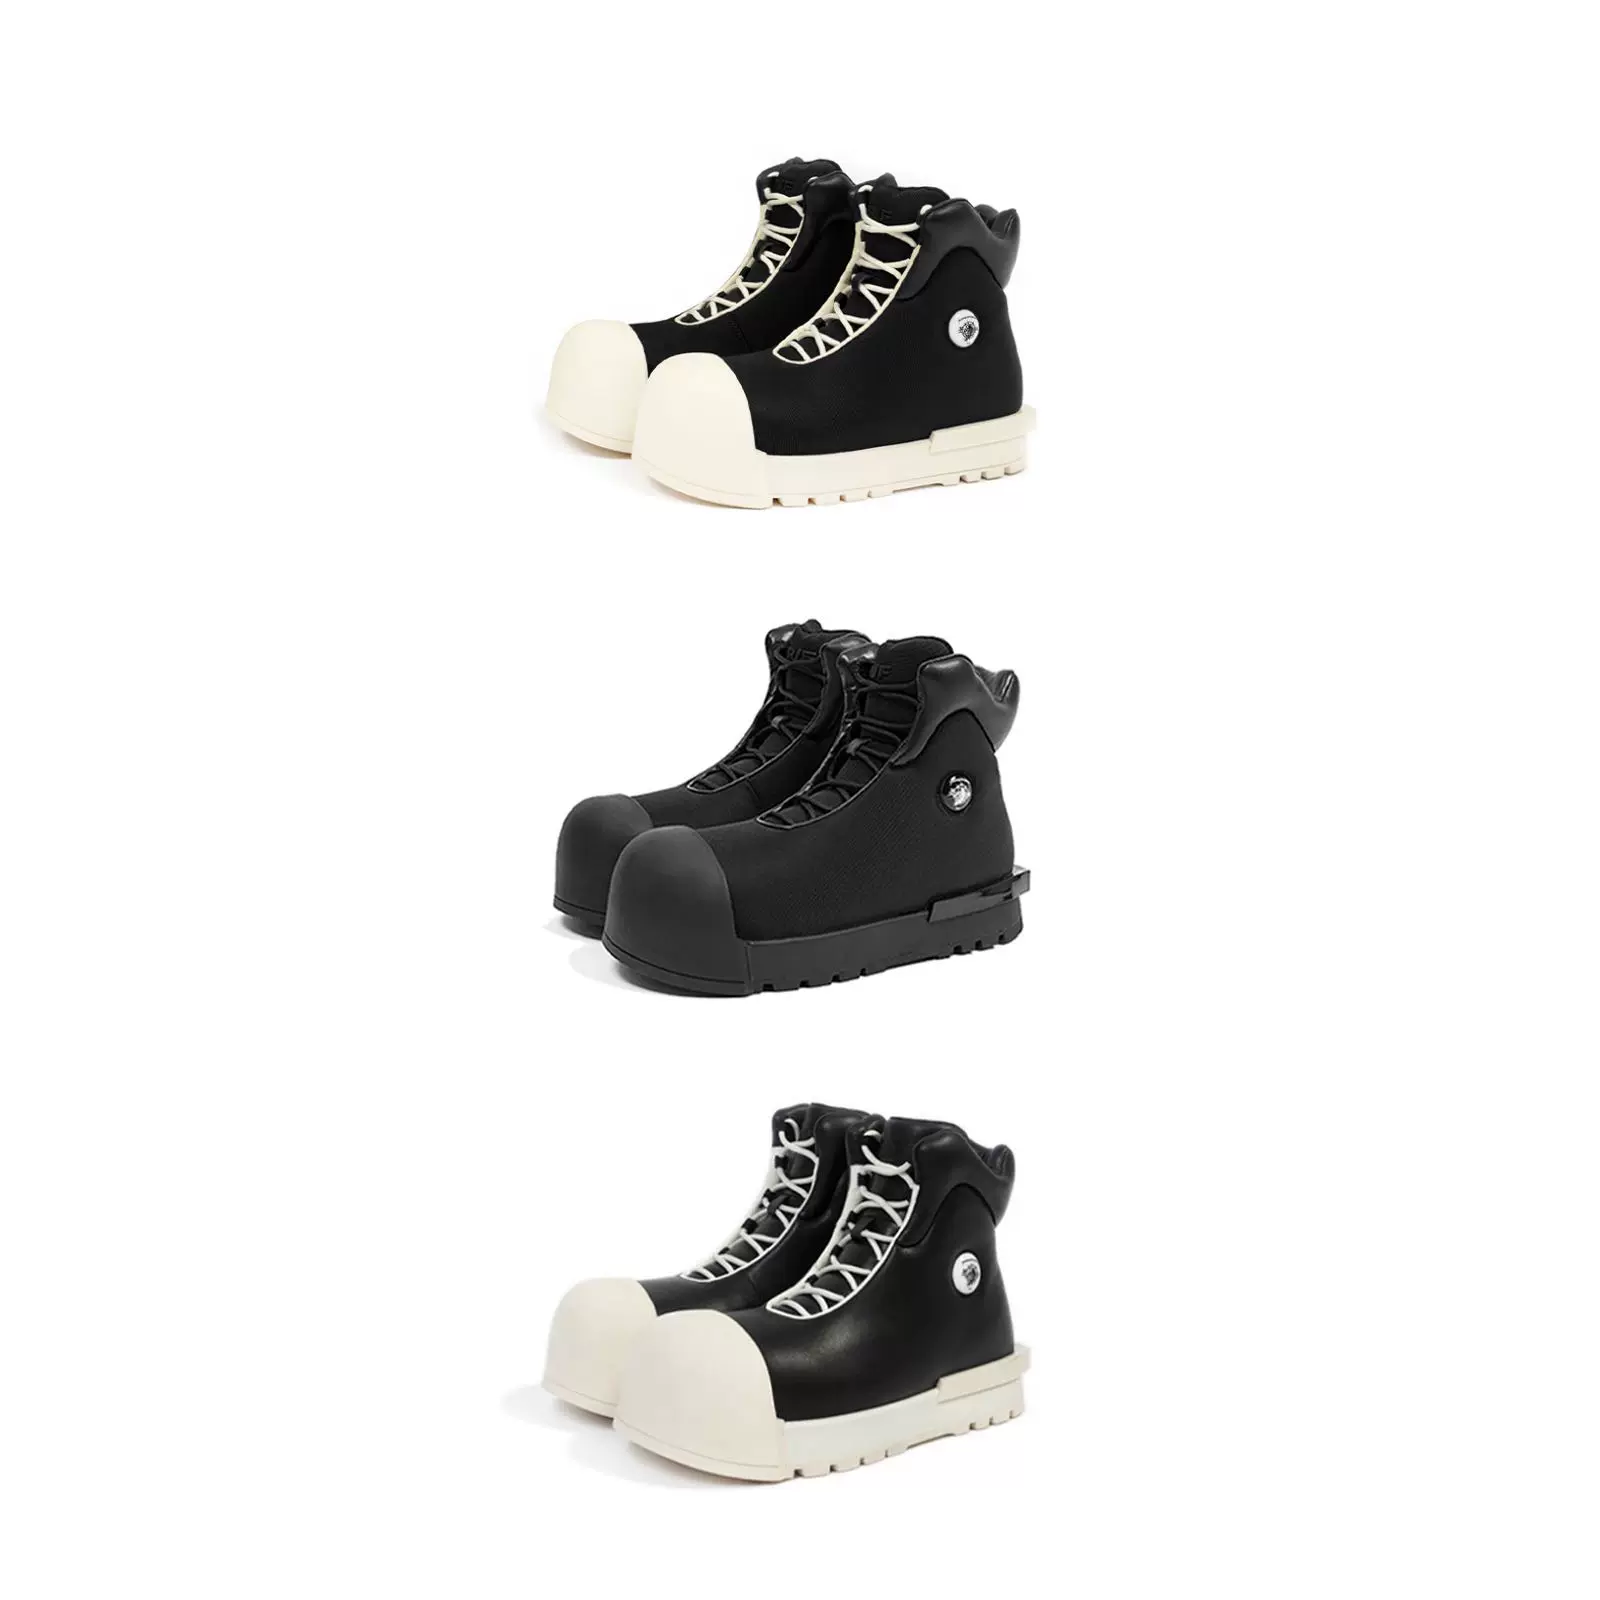 FVVO & ROCKSTA 高邦厚底靴THICK SOLED HIGH TOP BOOTS-Taobao